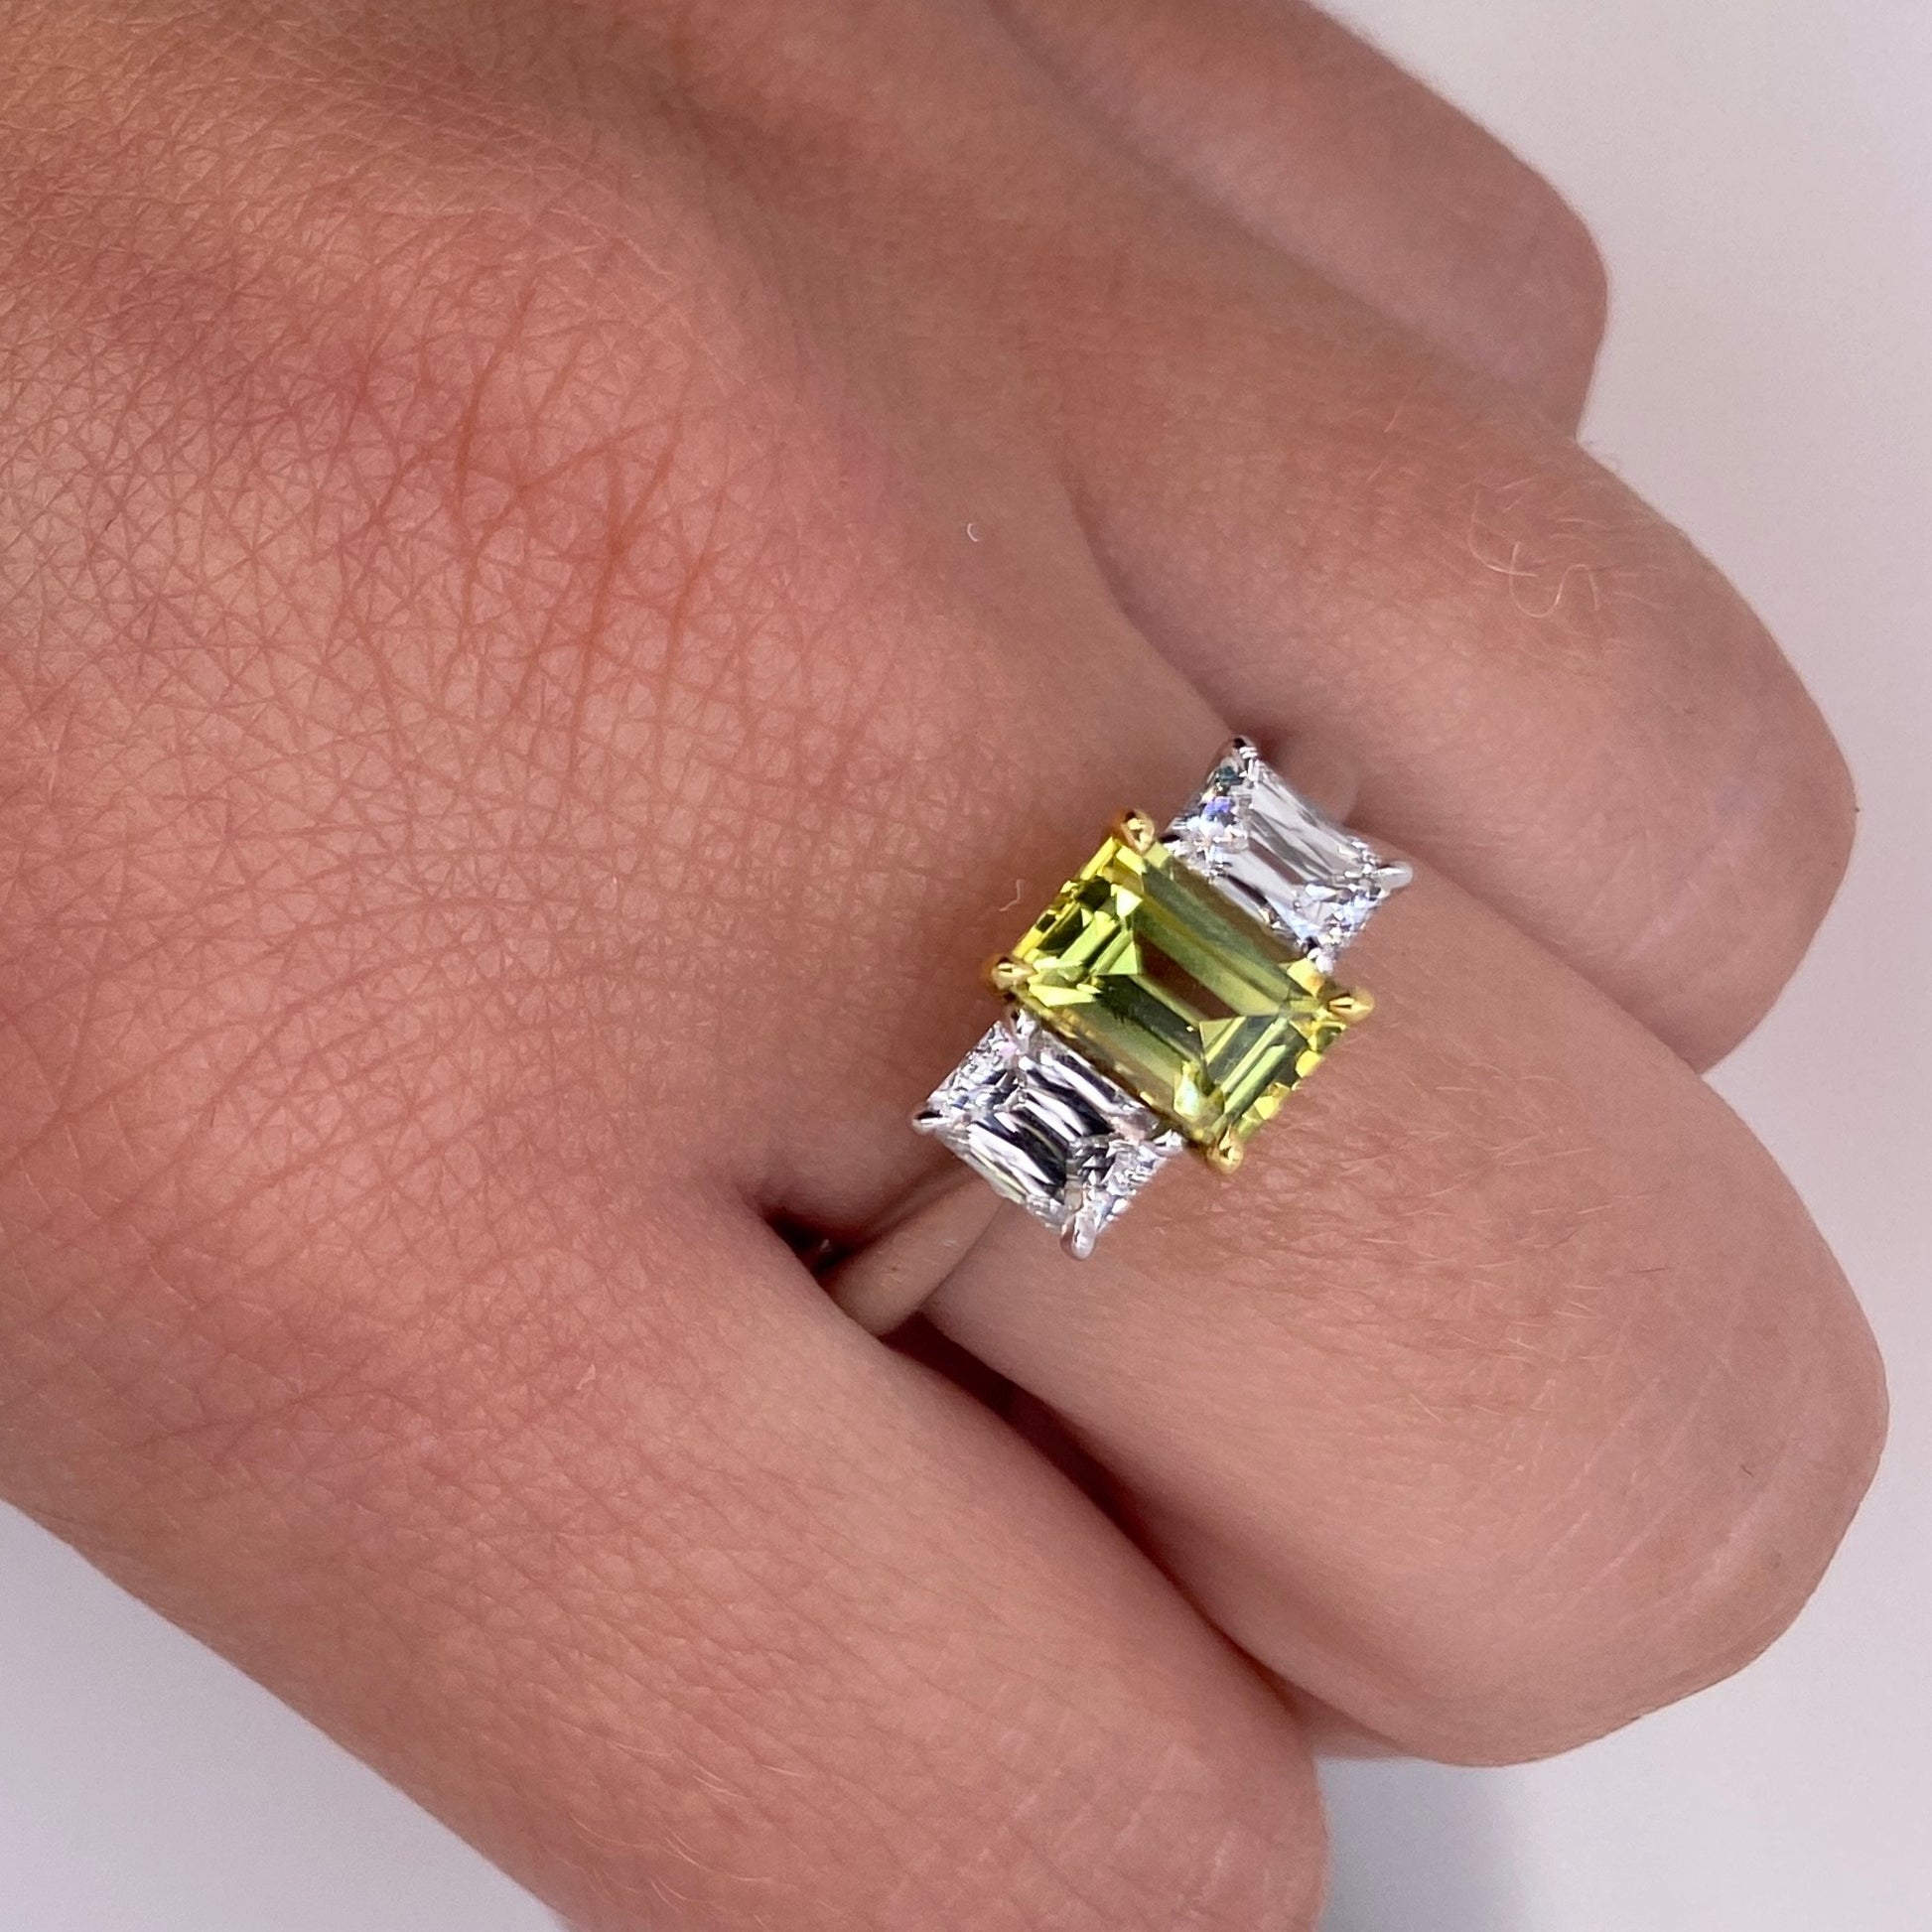 Contemporary Platinum & 18KT Yellow Gold Sapphire & Diamond Ring on finger